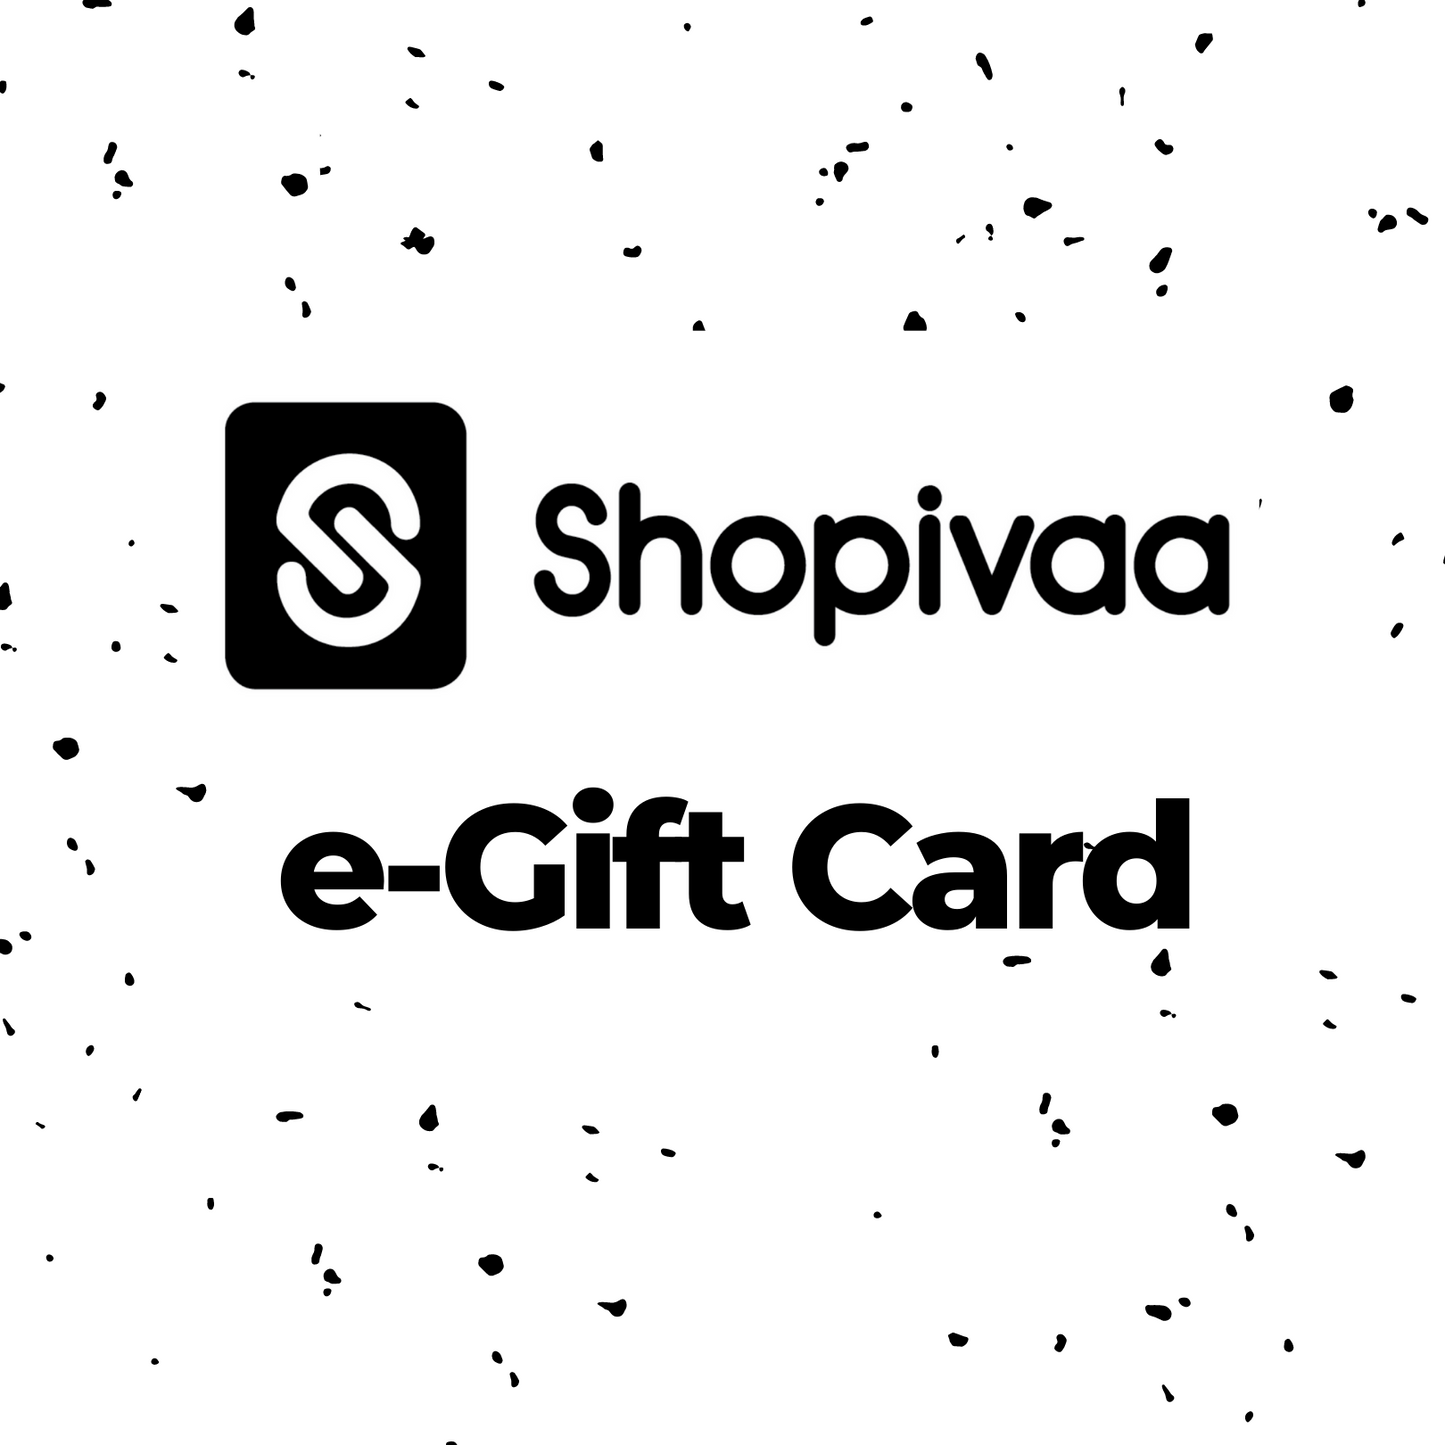 Shopivaa e-Gift Card